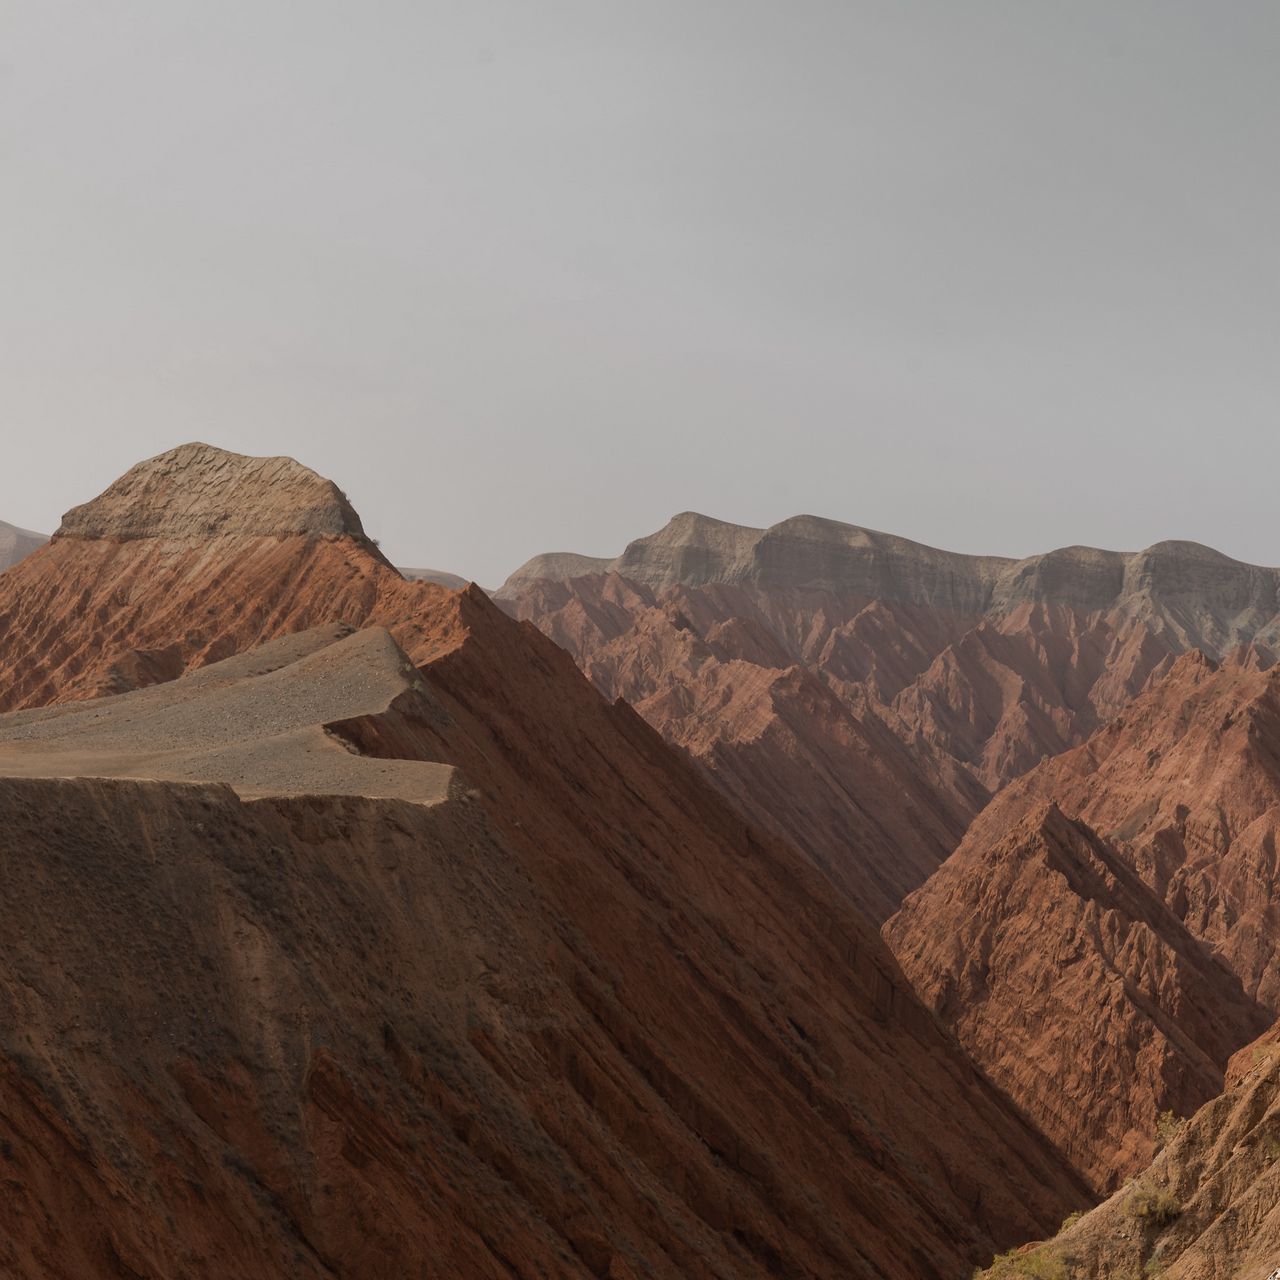 Download wallpaper 1280x1280 mountains, brown, landscape, nature ipad, ipad ipad mini for parallax HD background